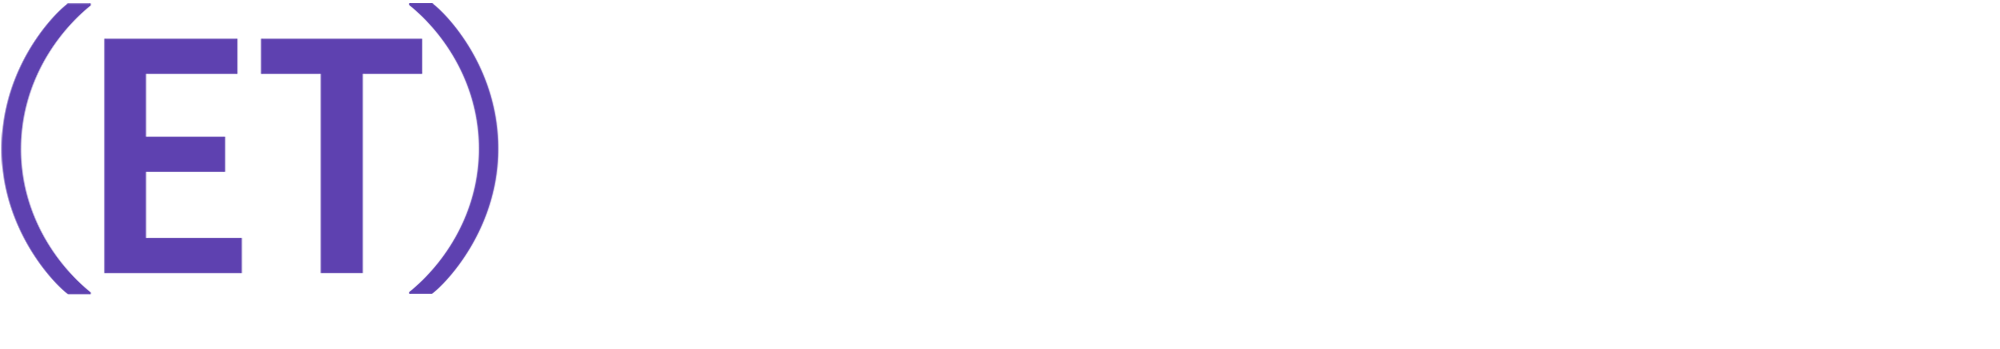 ET Magazine Logo